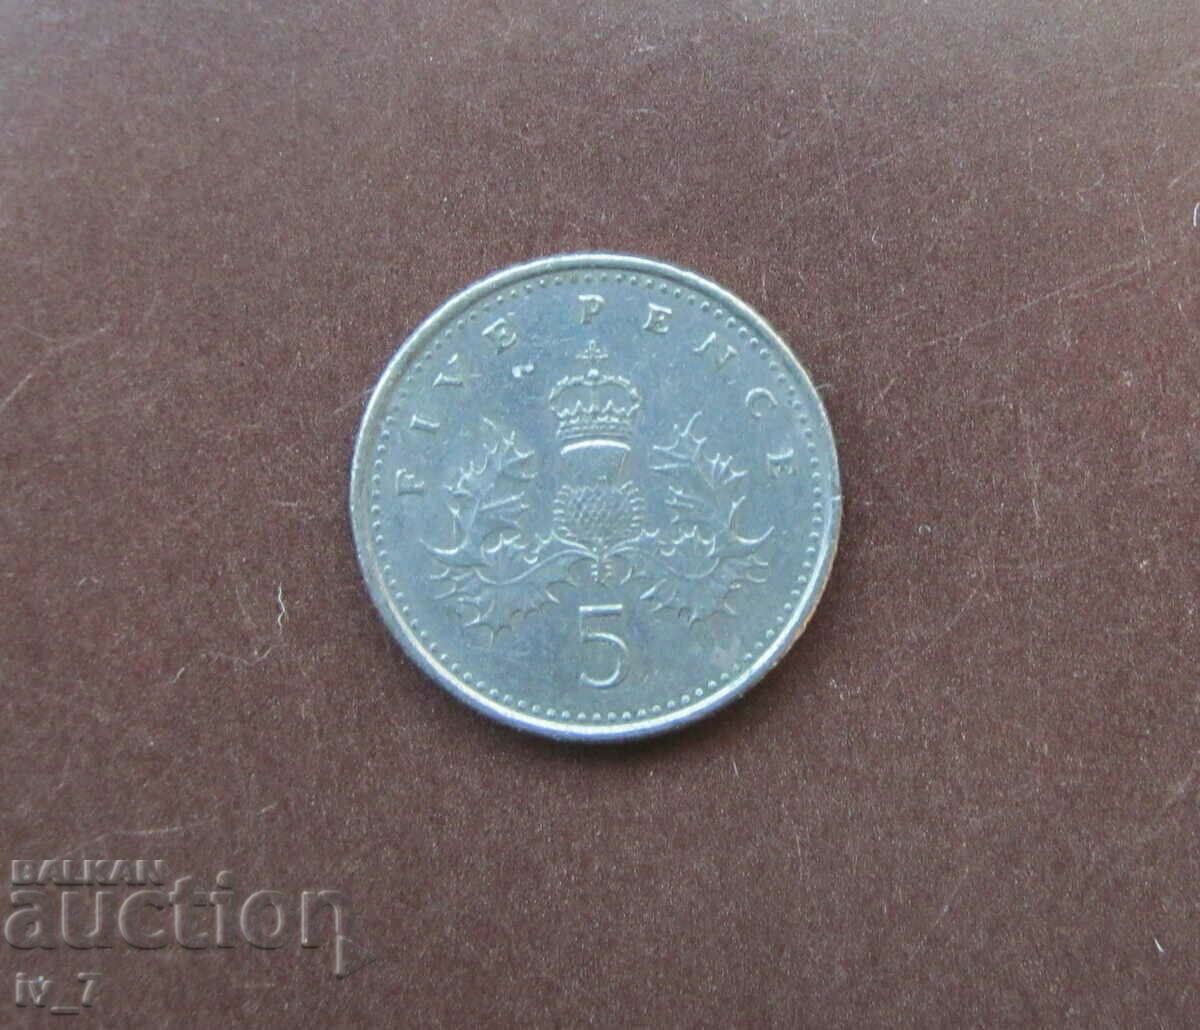 5 pence Great Britain 1990